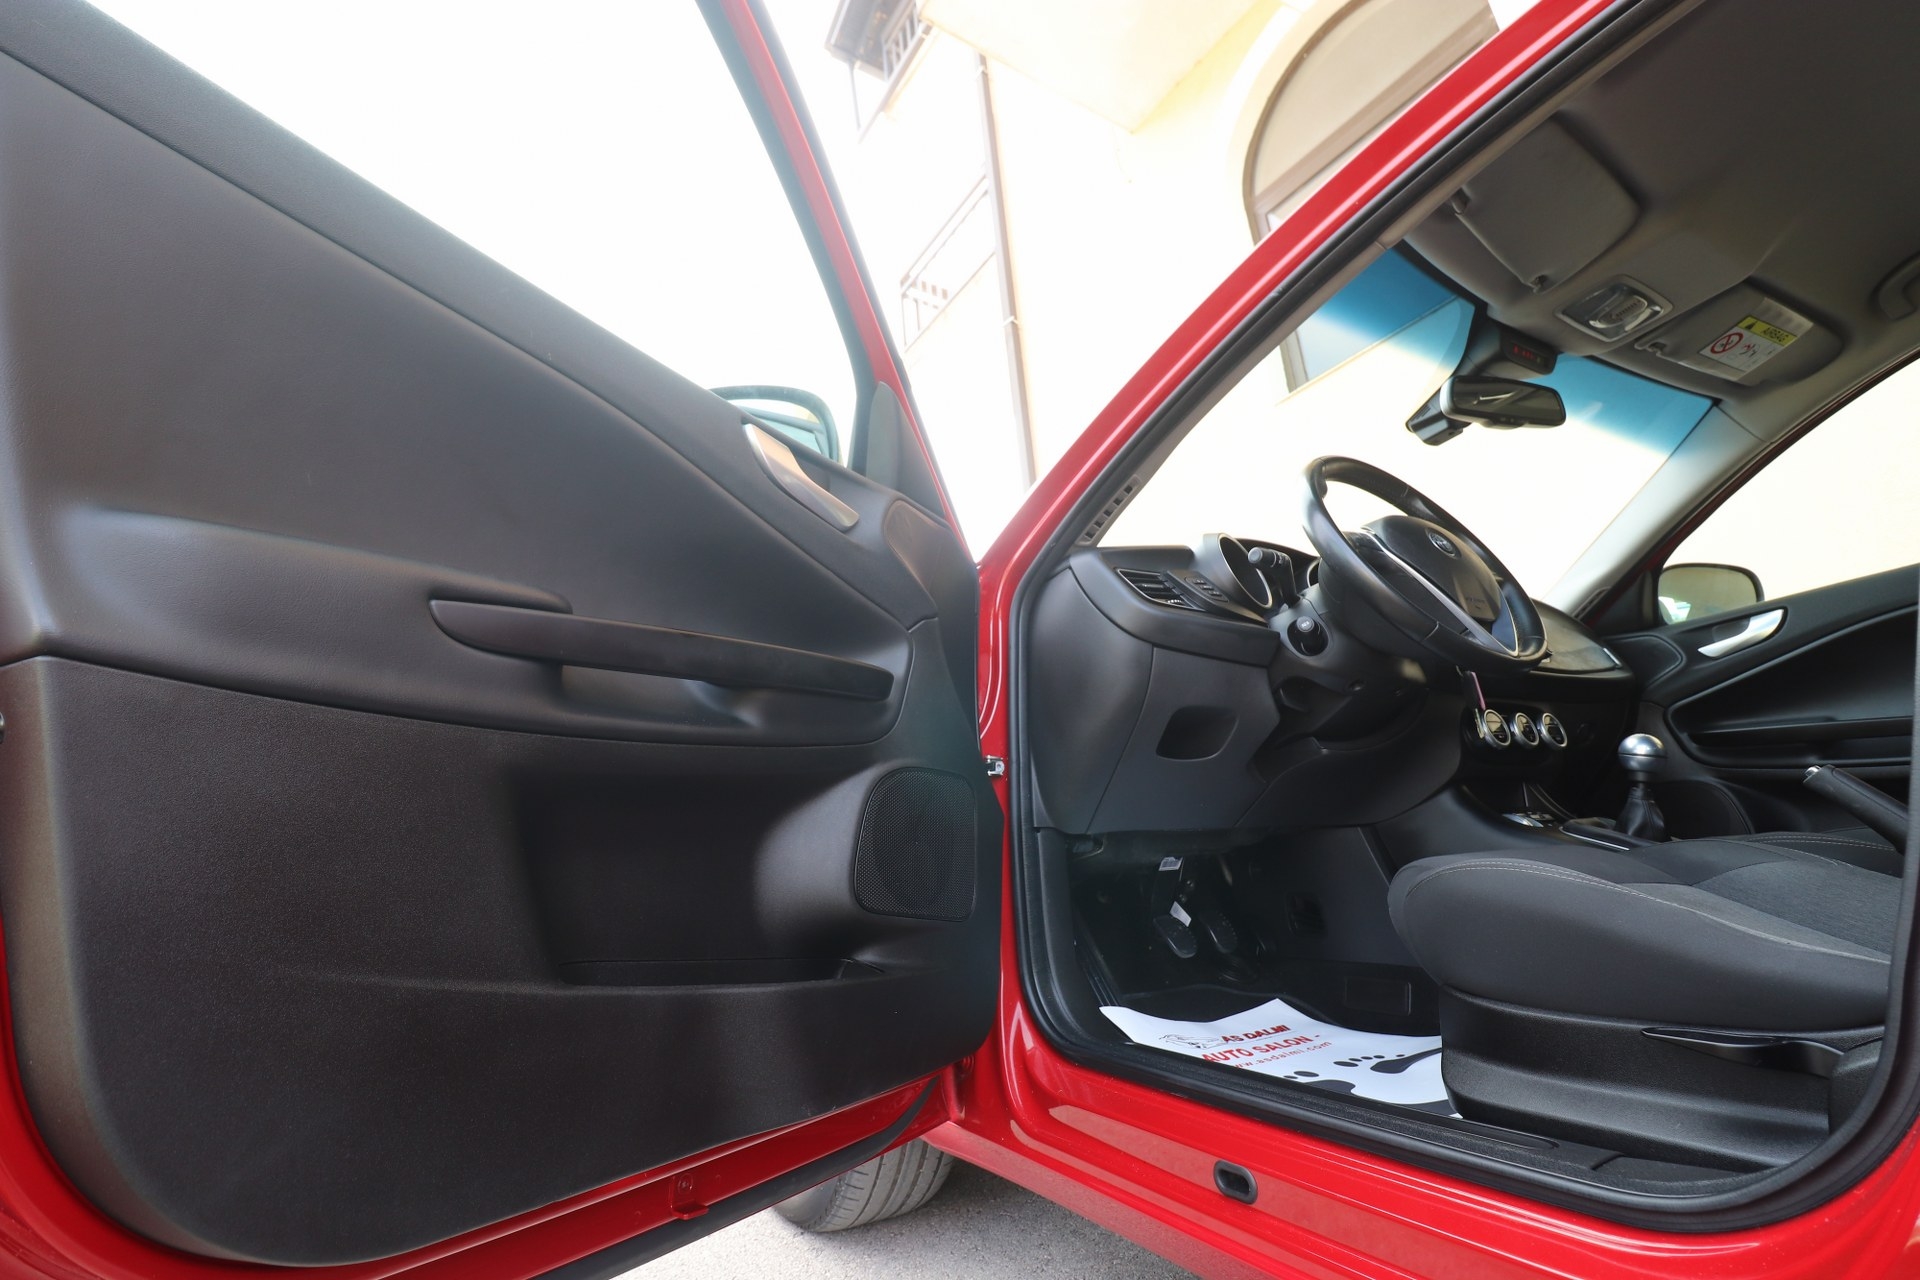 Alfa Romeo Giulietta 1.6 JTDM Super Sportpaket Plus Bi-Xenon+LED Navigacija Parktronic MAX-VOLL 88 kW-120 KS -New Modell 2018-FACELIFT